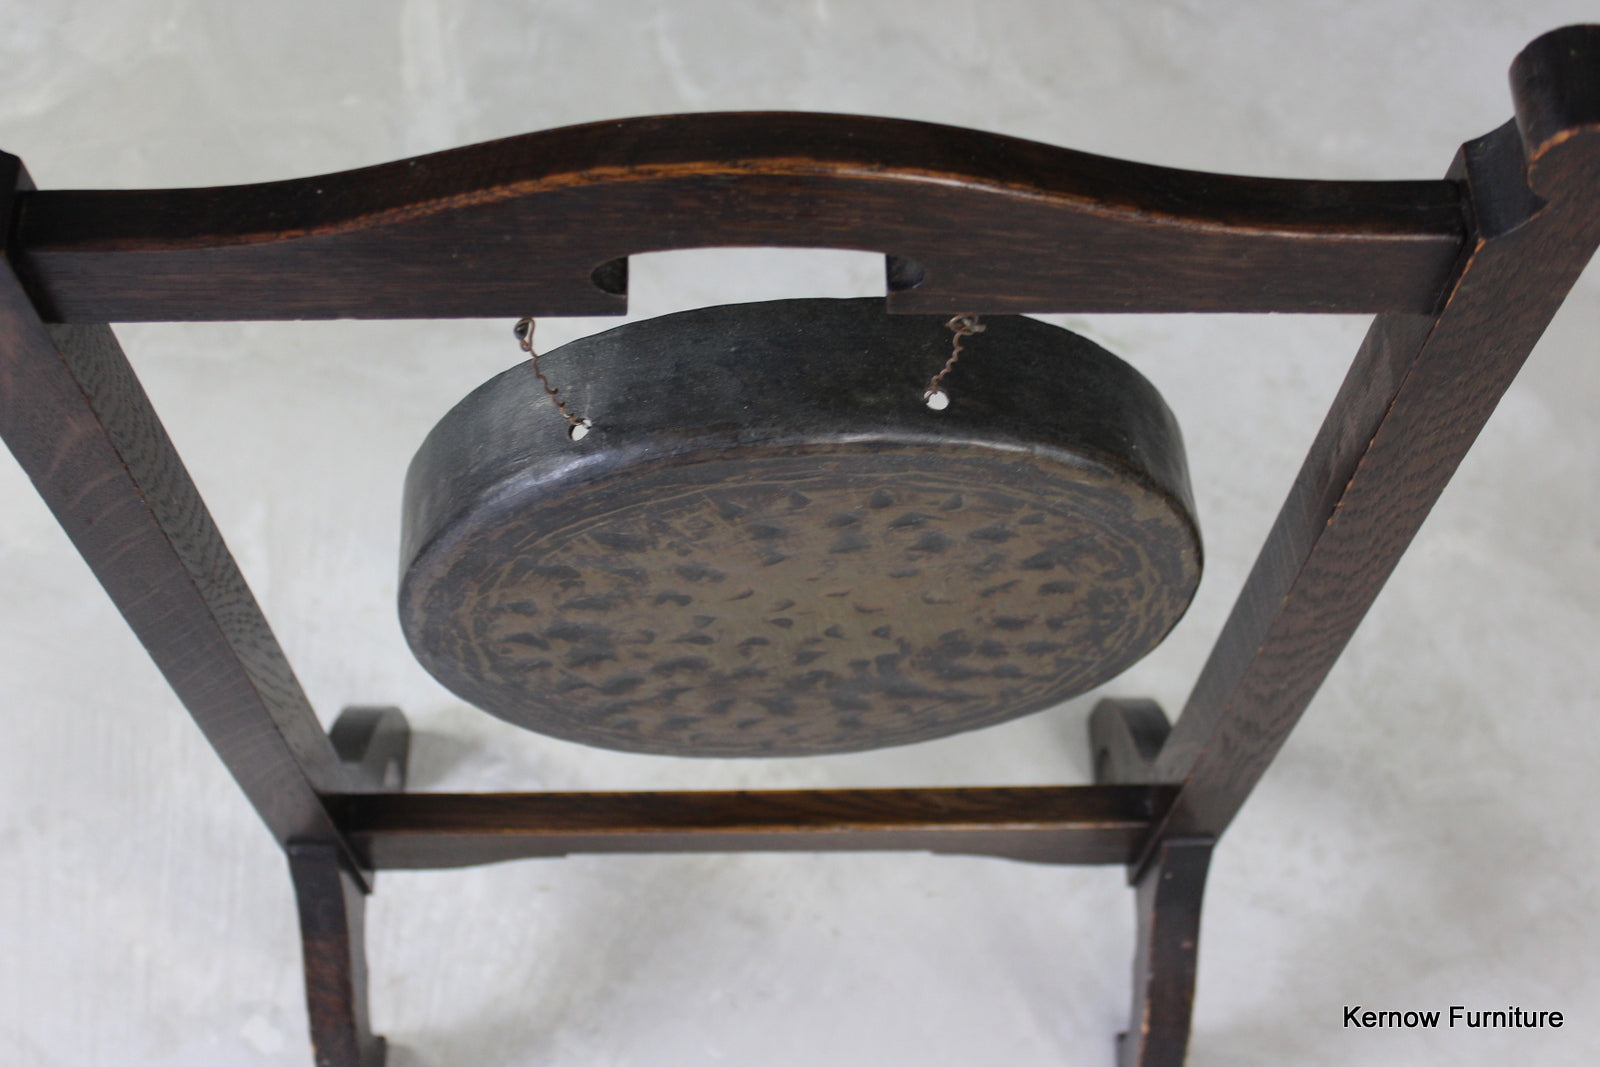 Victorian Dinner Gong - Kernow Furniture